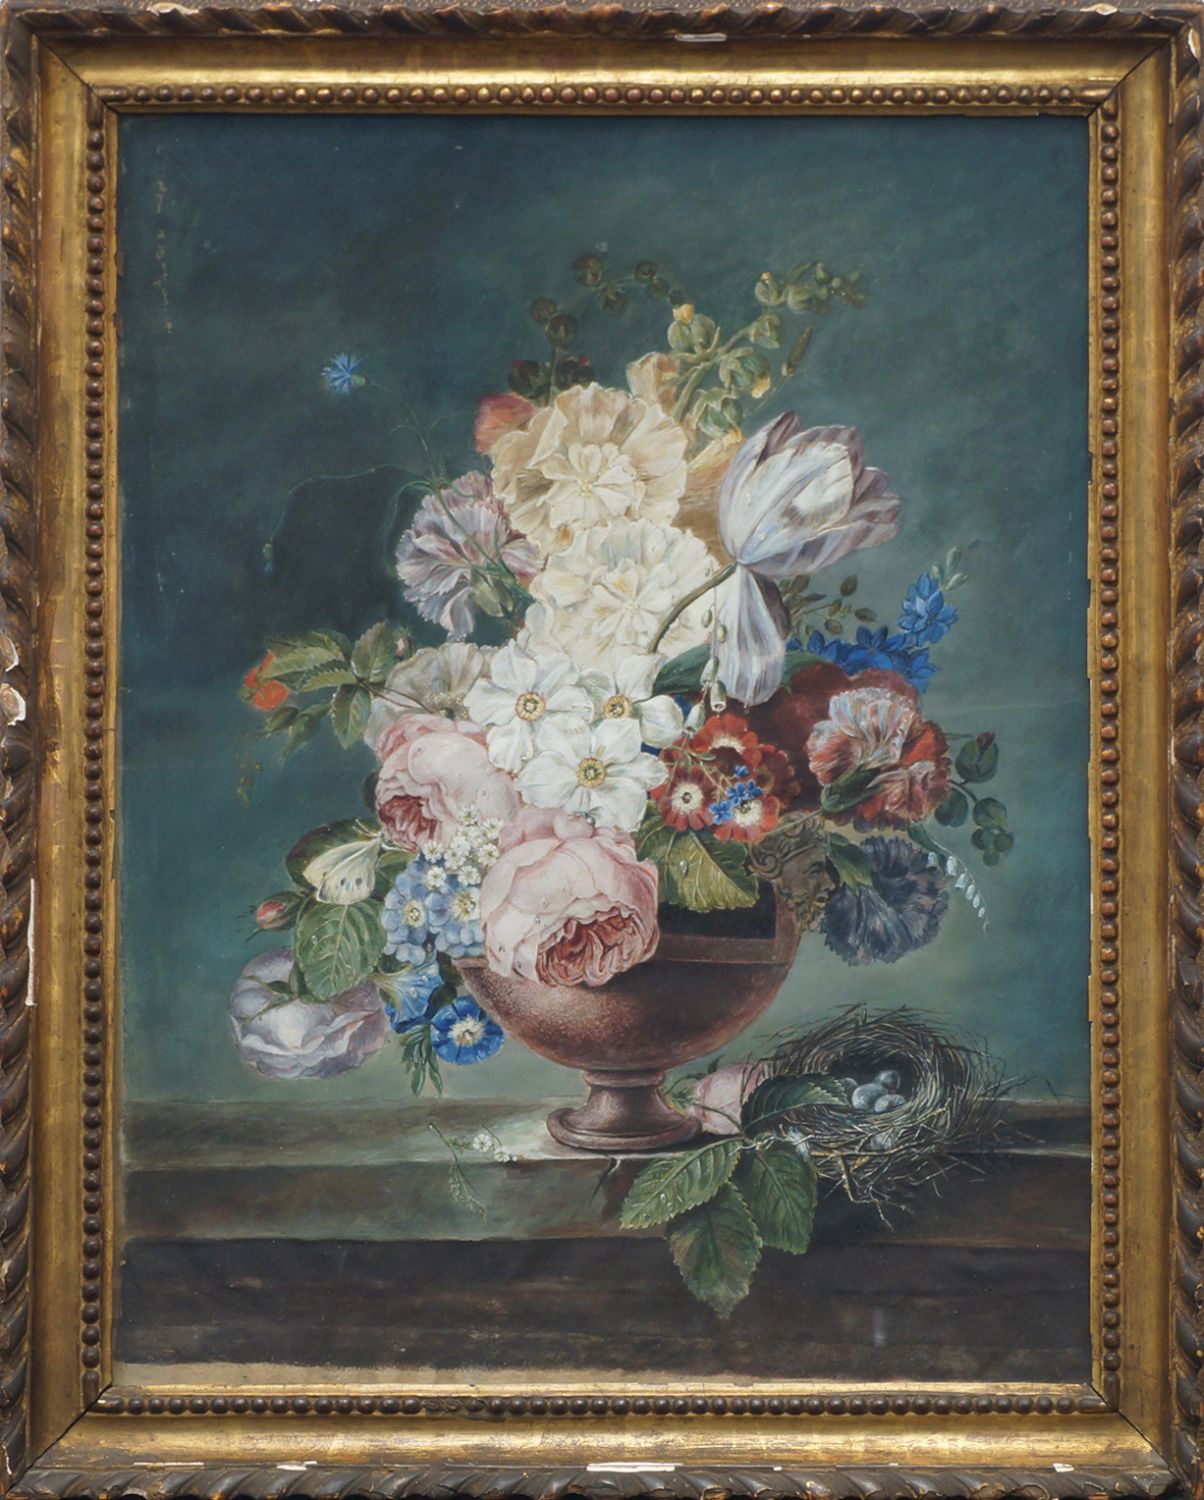 Follower of Gerardus Van Spaendonck, Dutch 1746-1822- Flowers in an urn with fruit on a ledge;